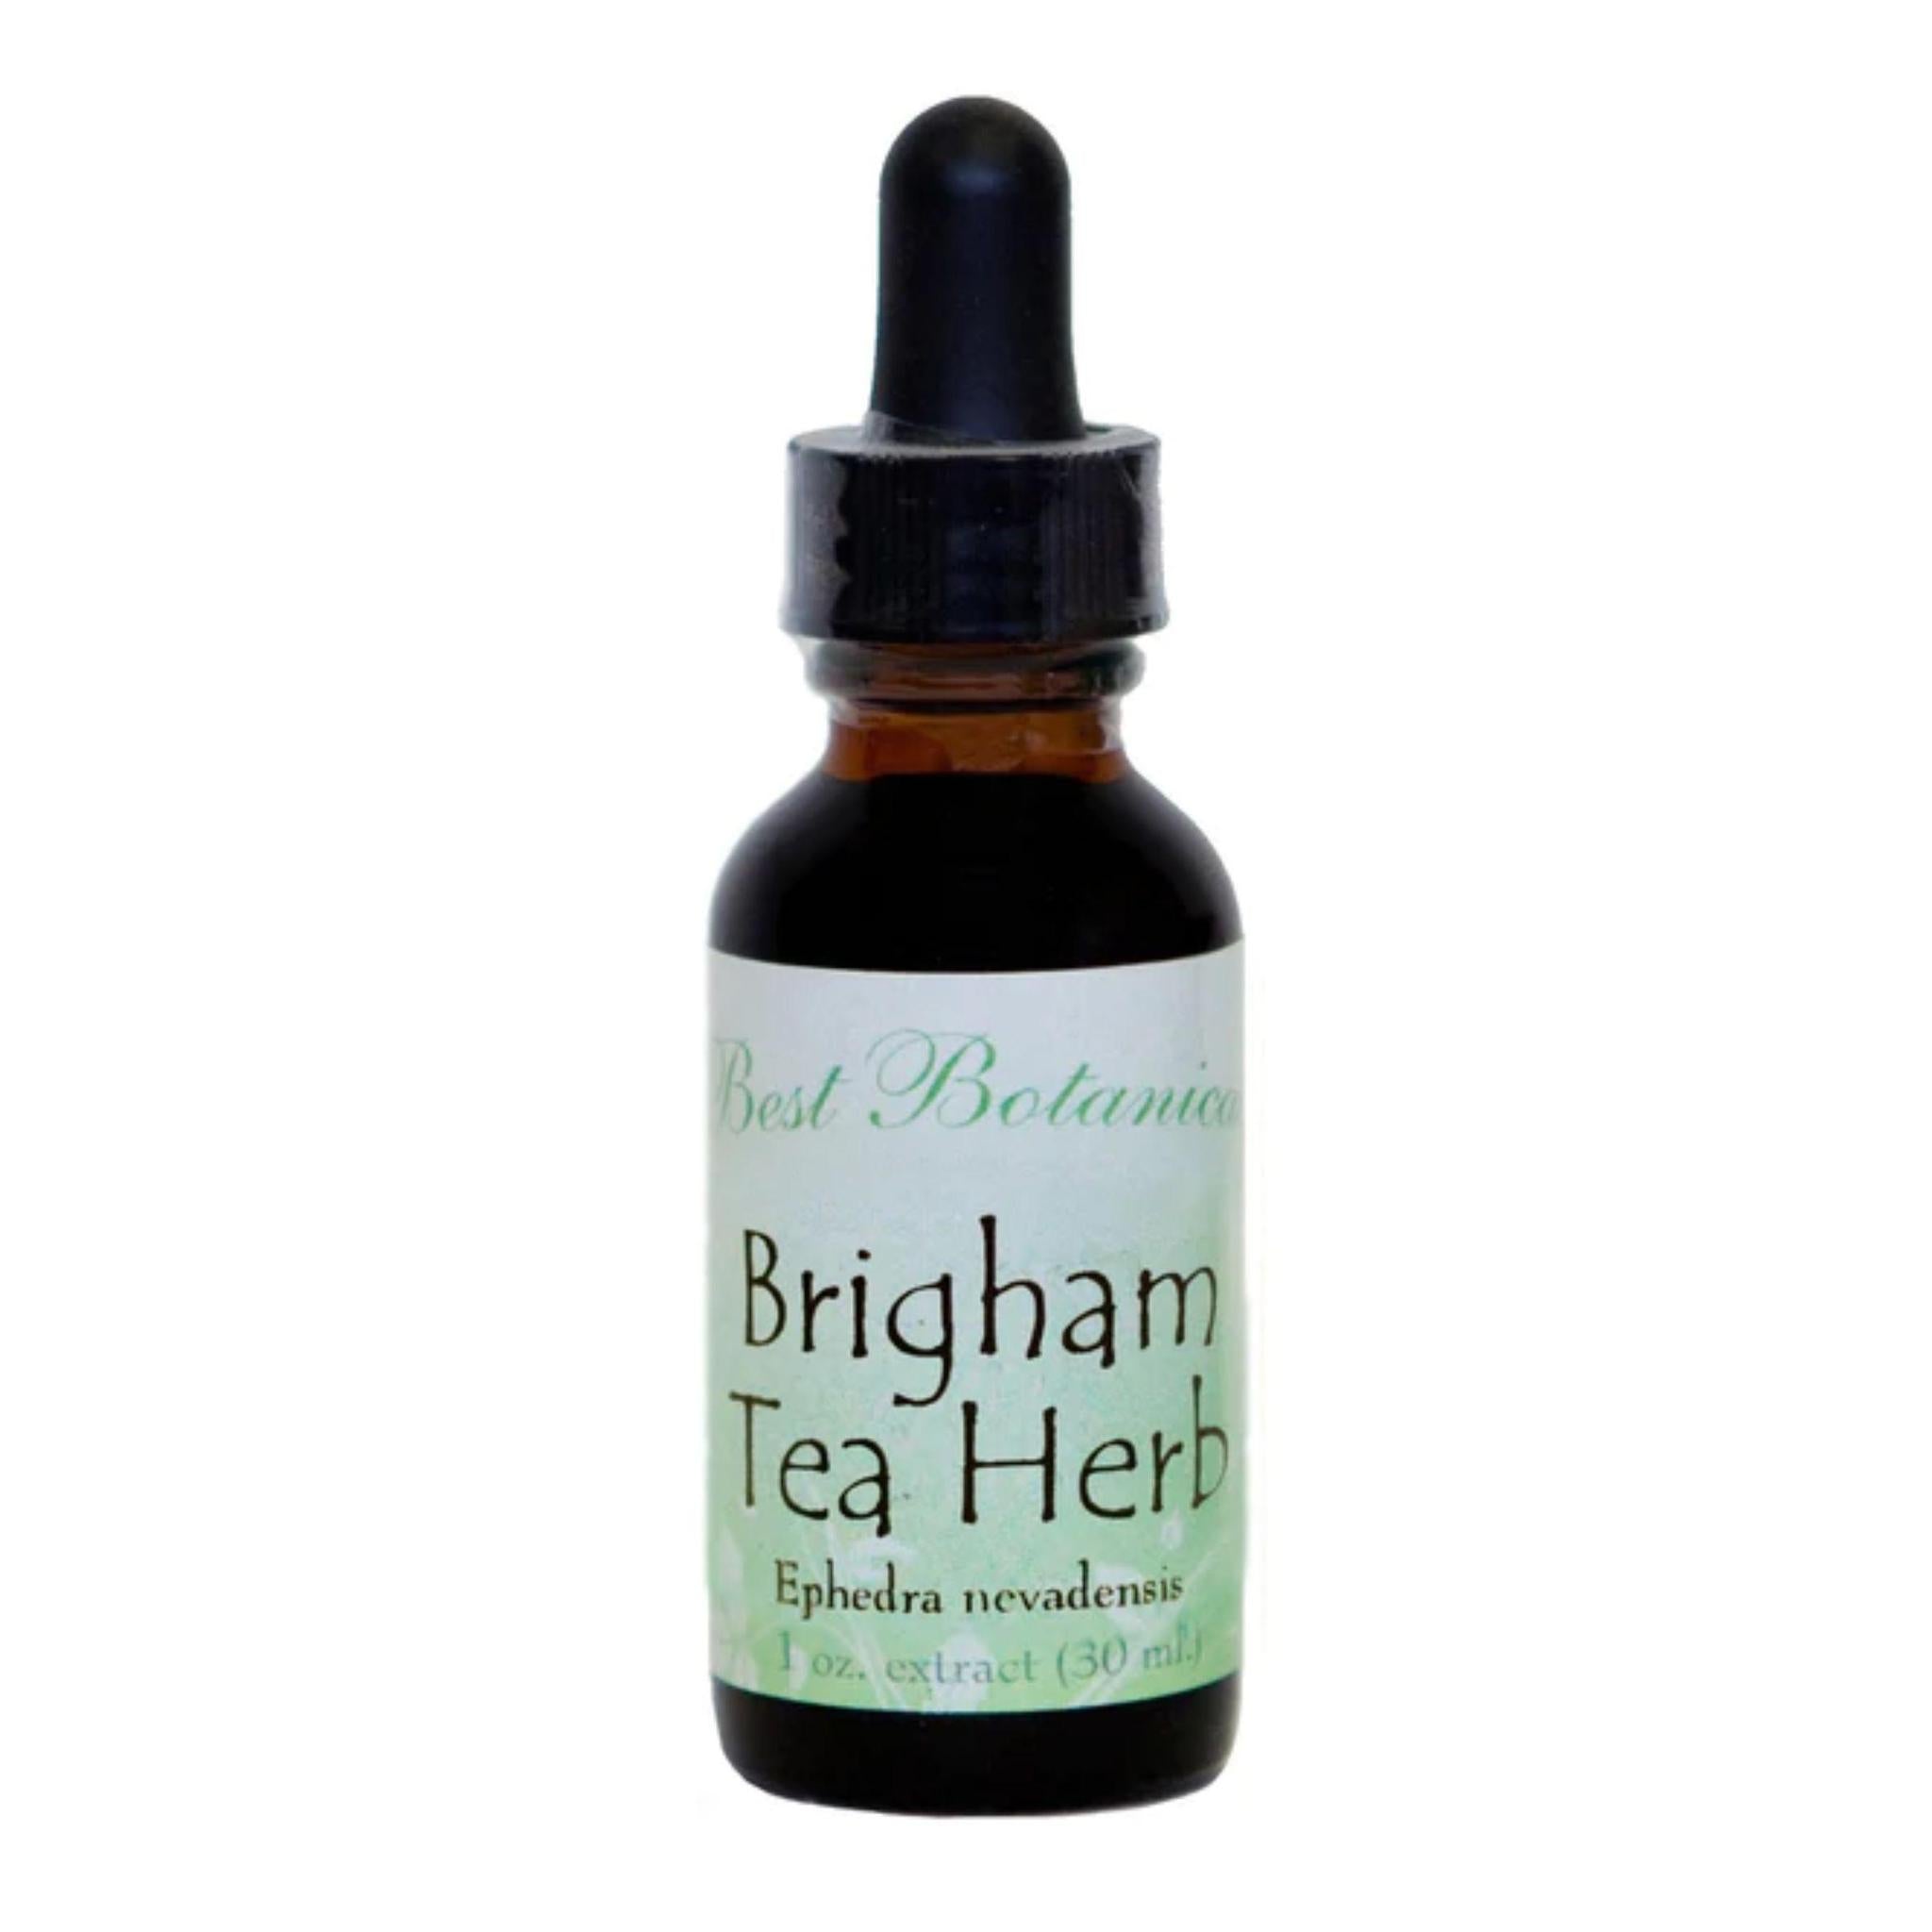 Brigham Tea Herb Extract - 1 oz